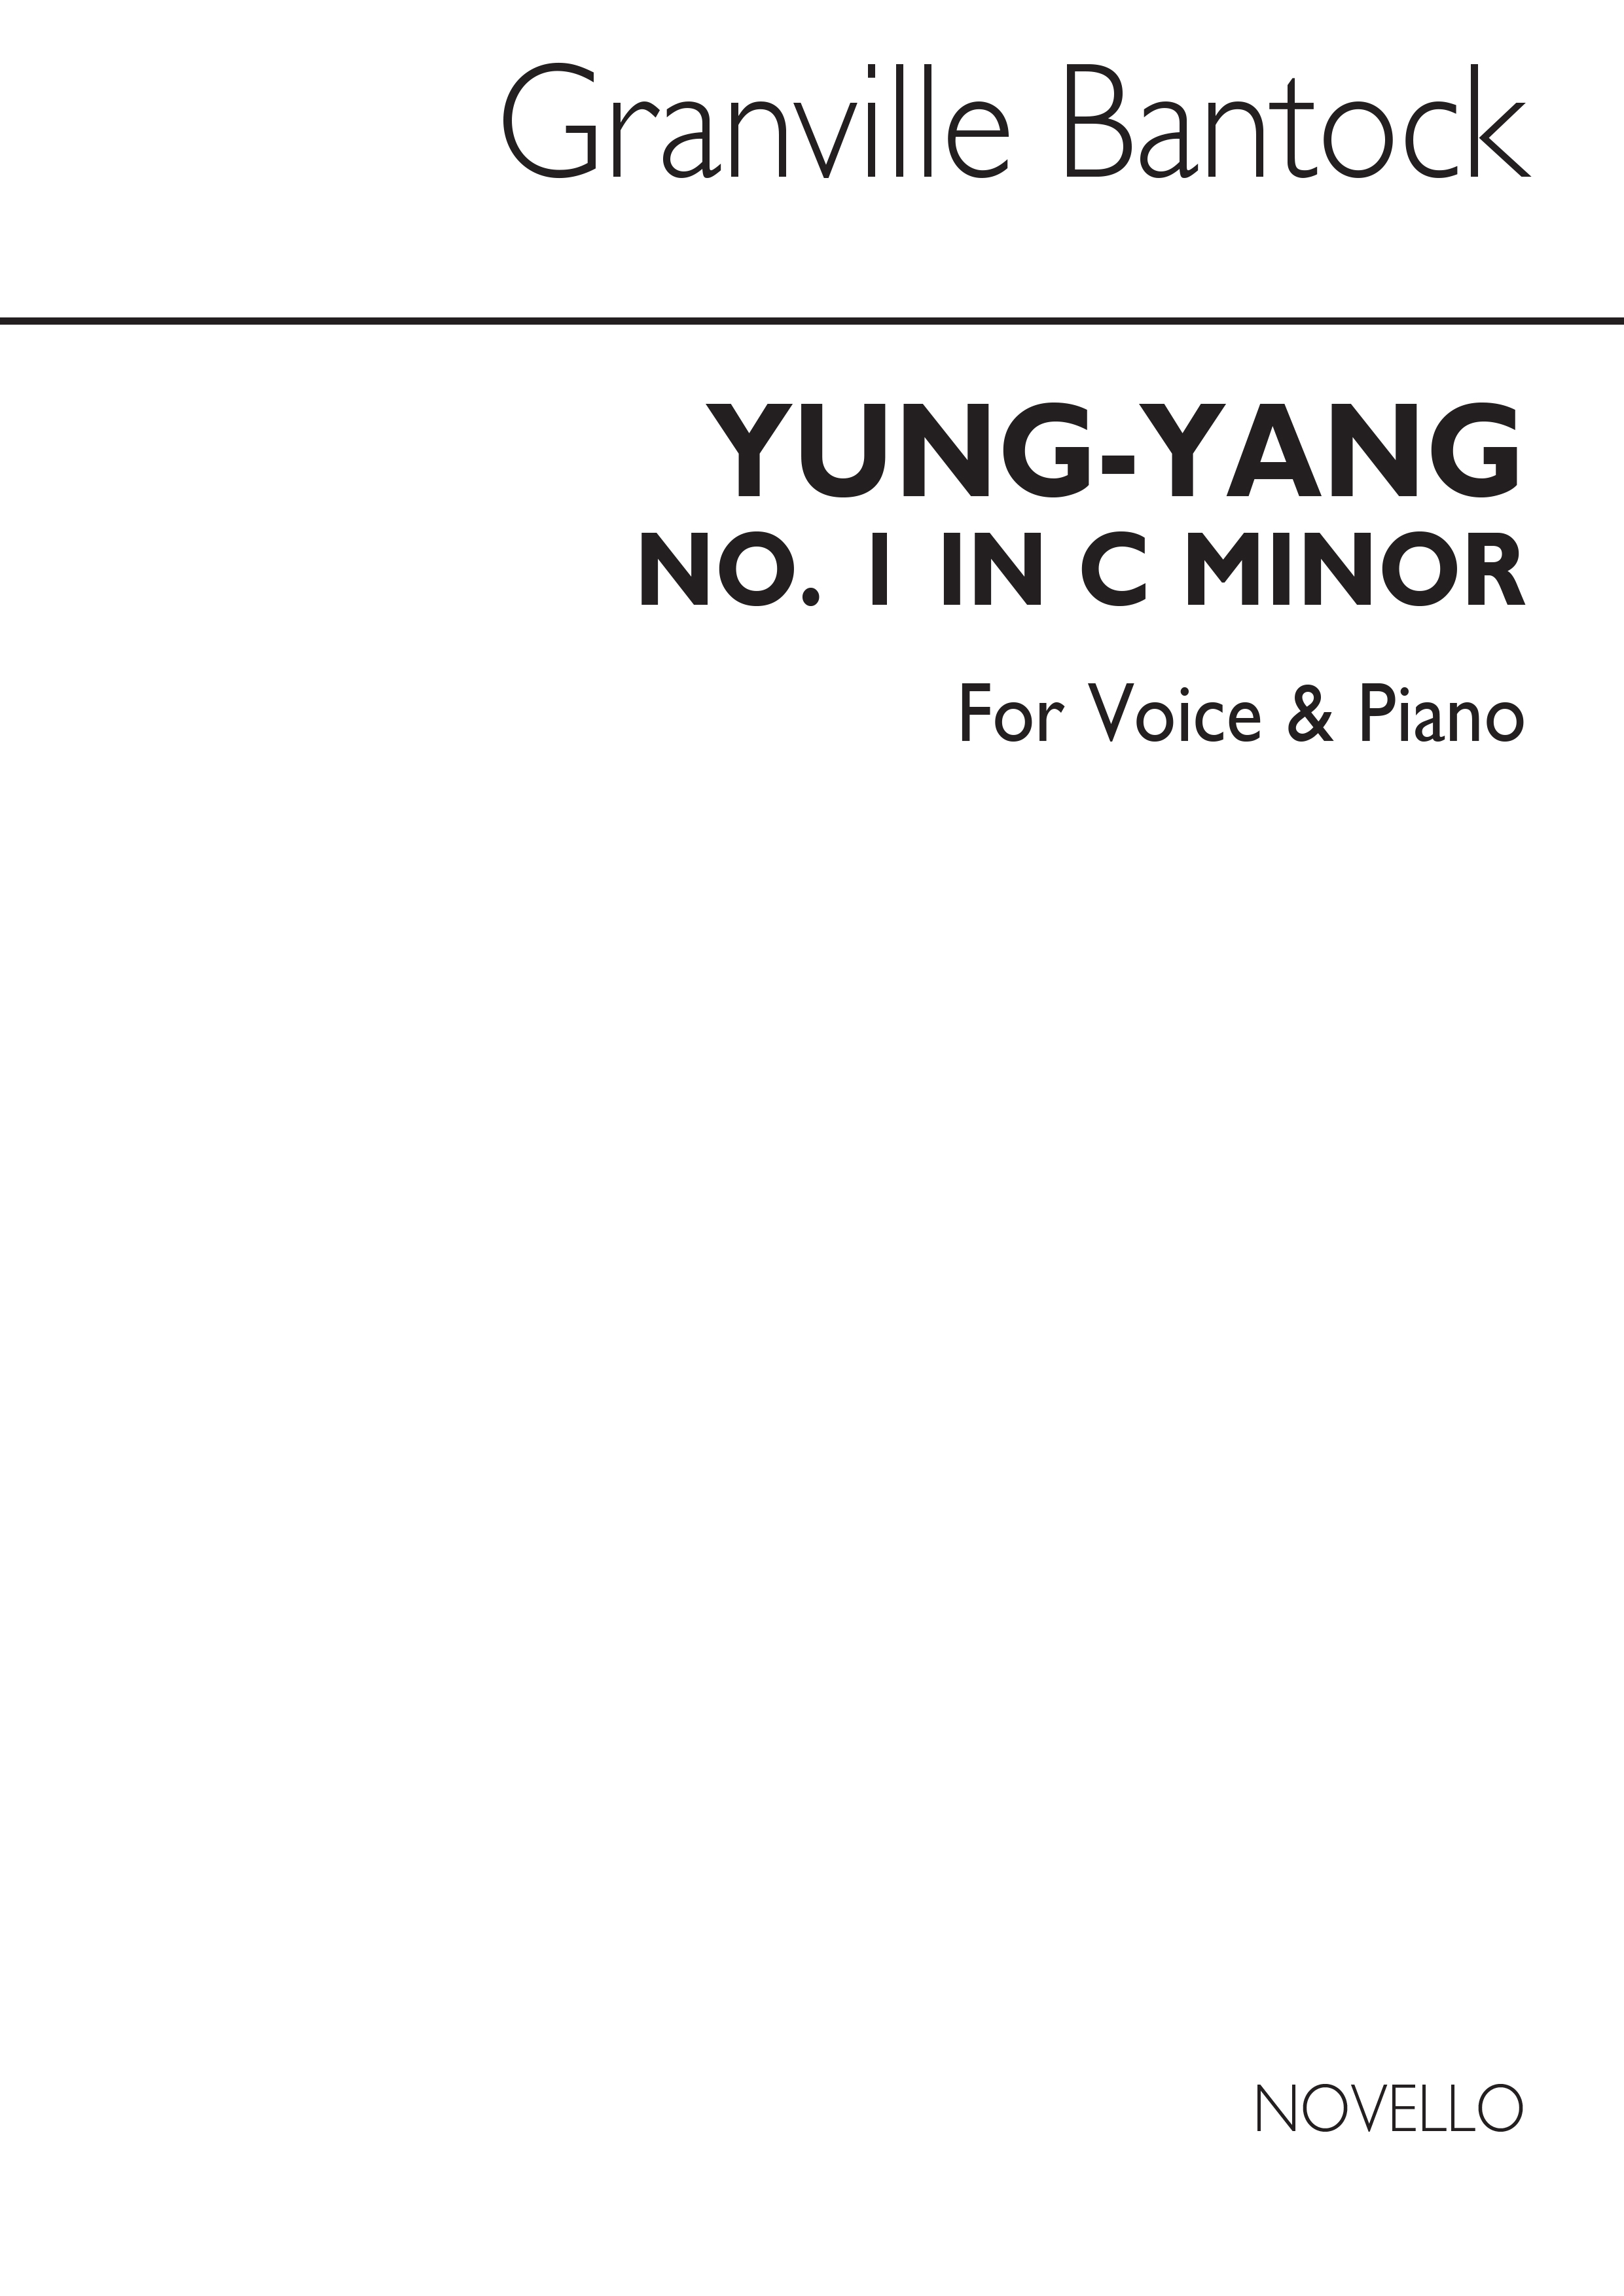 Bantock: Yung-yang for Medium Voice and Piano accompaniment